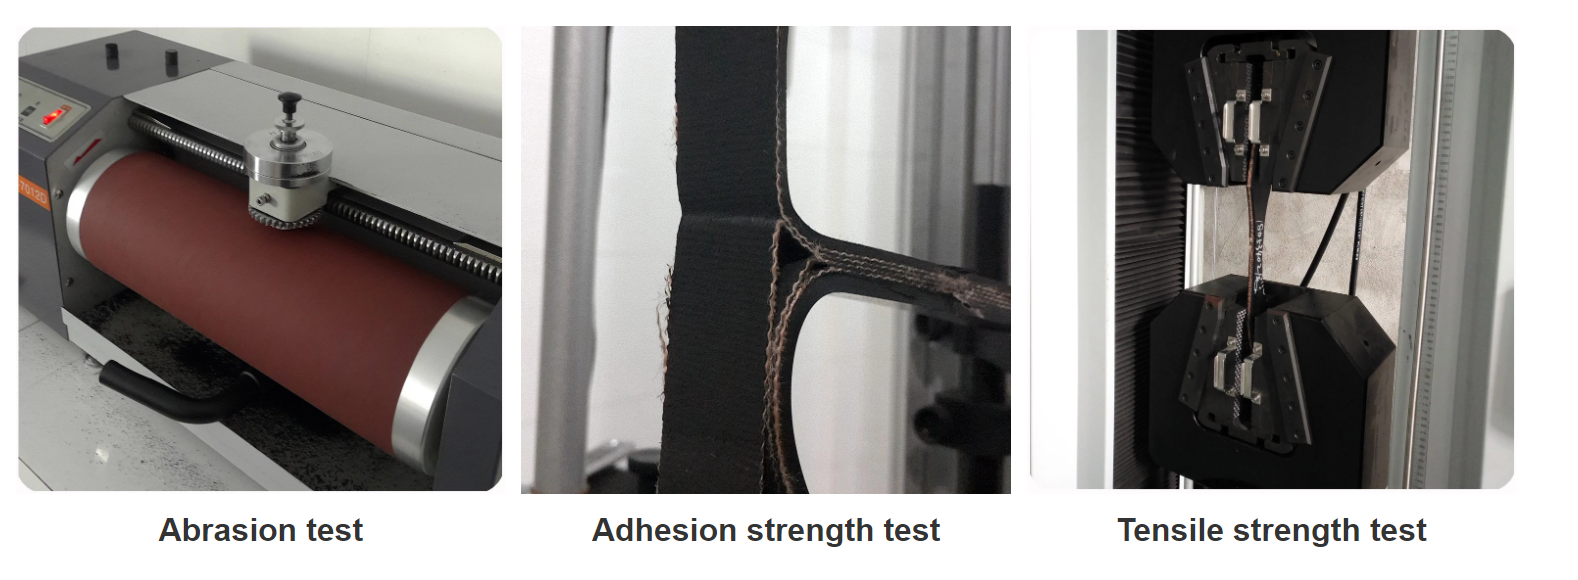 abrasion test adhesion strength test